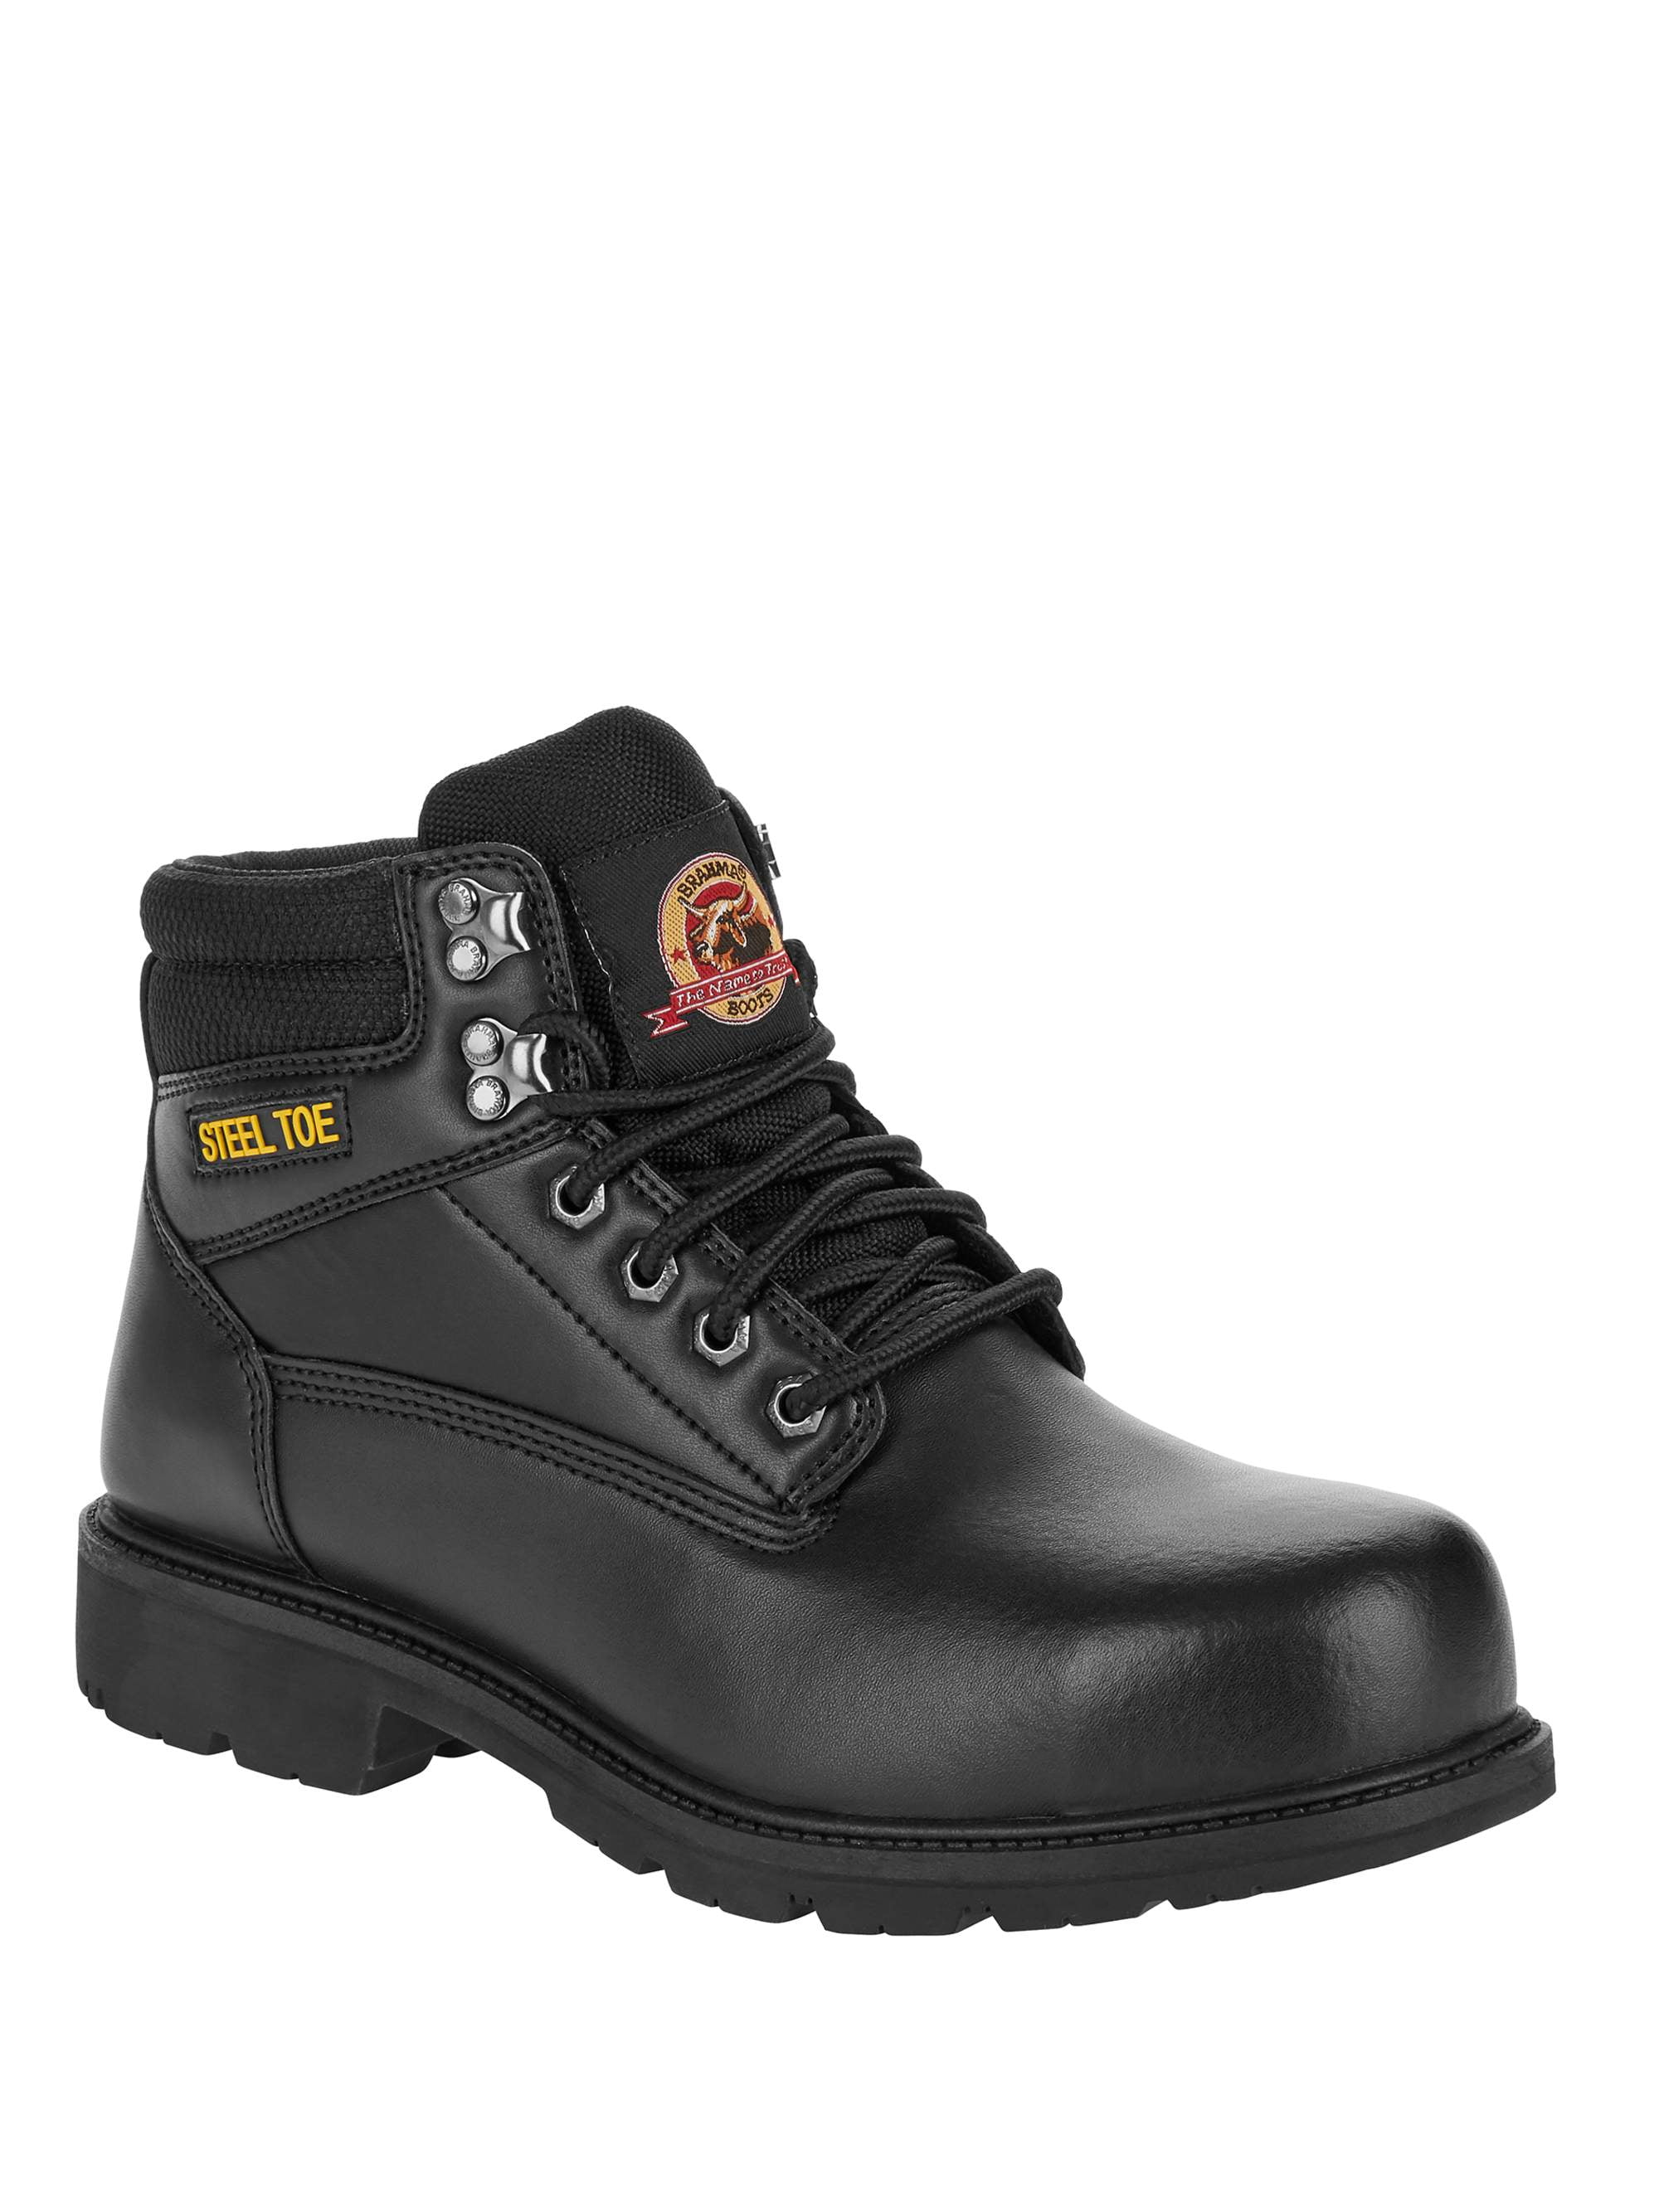 Black Work Boots - Walmart.com